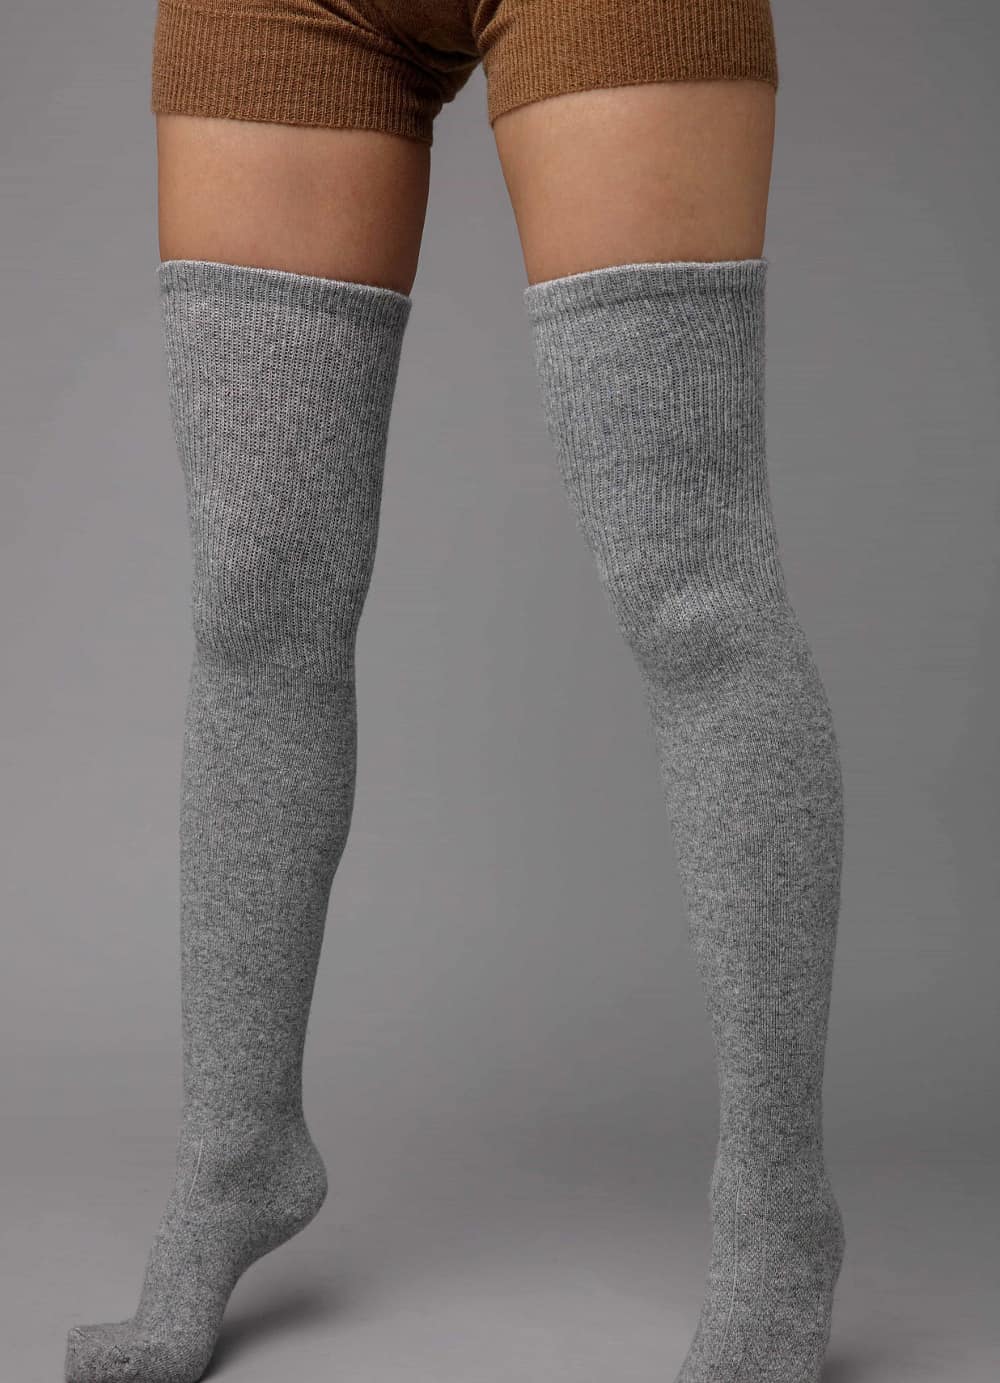 Woolen Stockings For Winter | tunersread.com